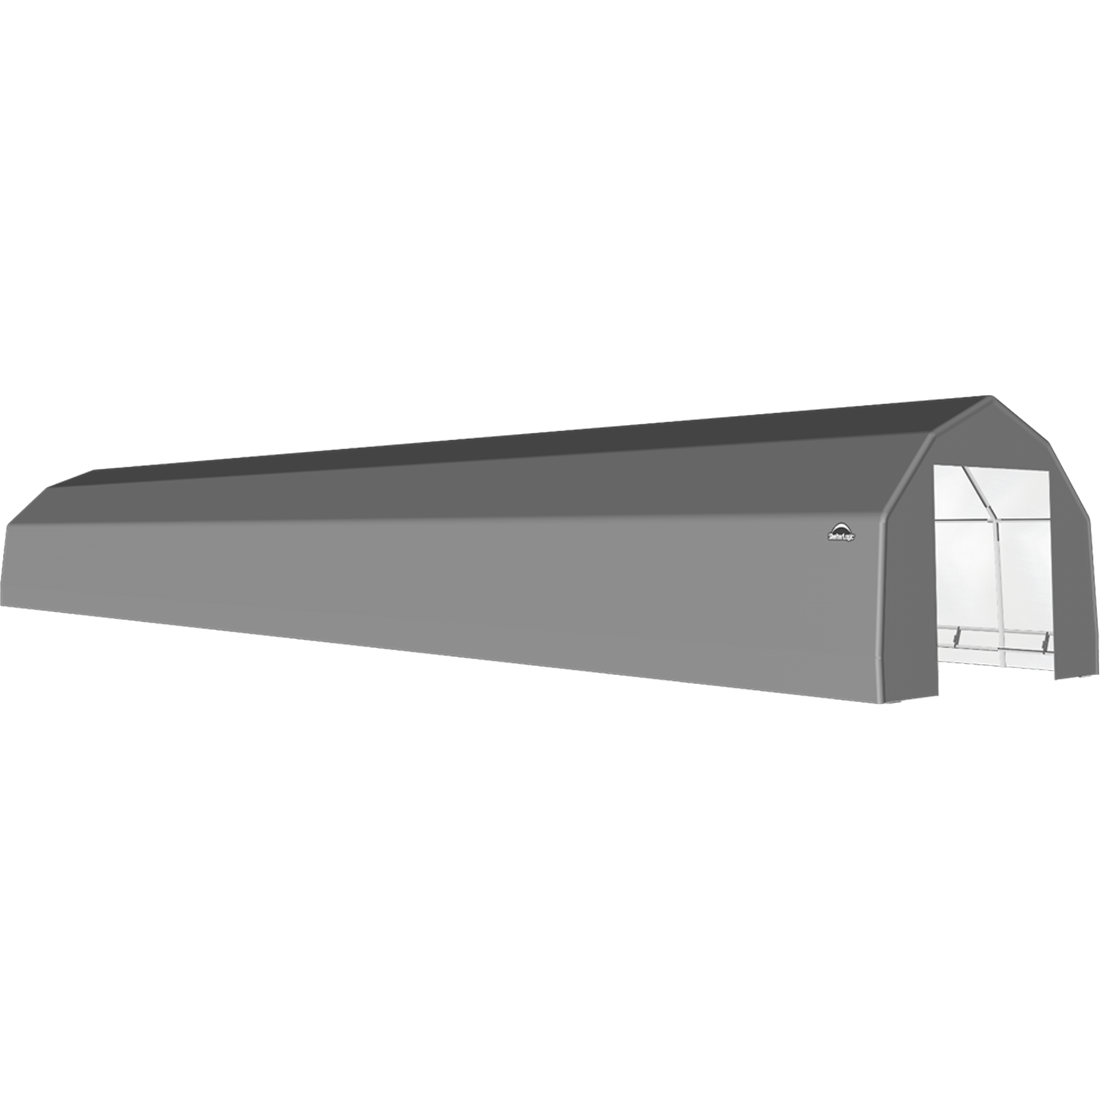 ShelterTech SP Series Barn Shelter, 15 ft. x 72 ft. x 11 ft. Heavy Duty PVC 14.5 oz. Gray